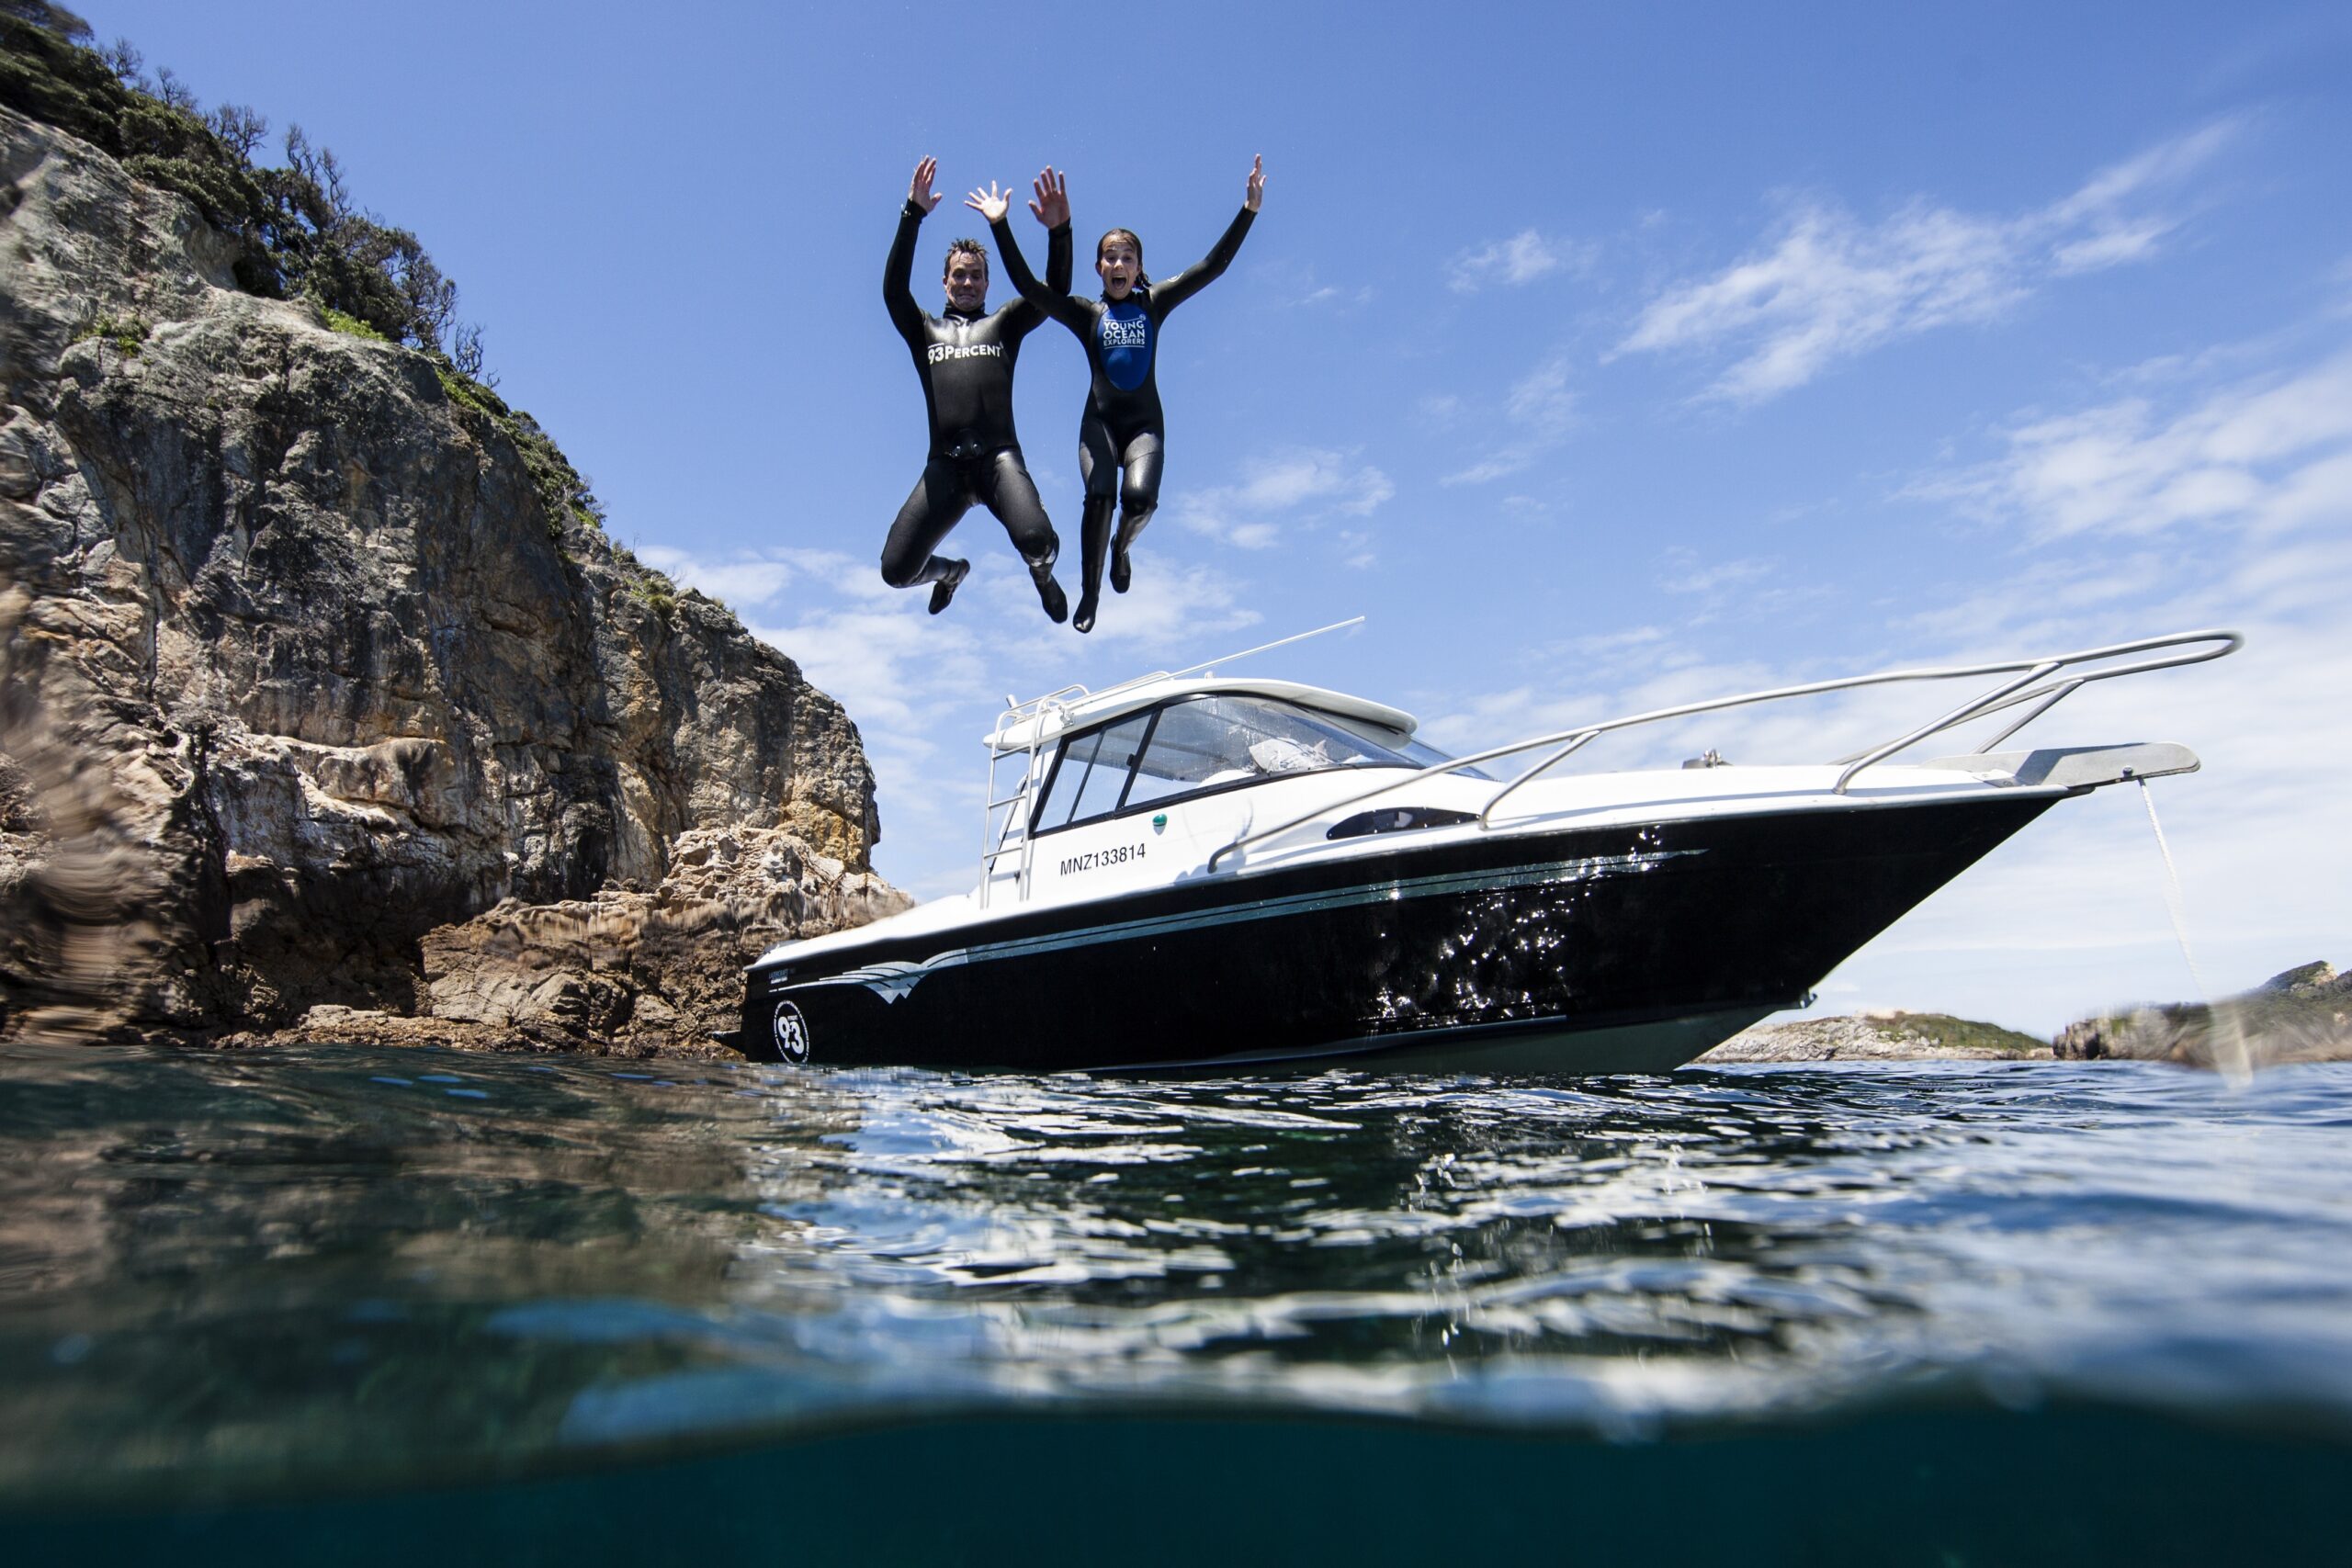 Kiwi dad and teenage daughter make global splash with marine wildlife docos